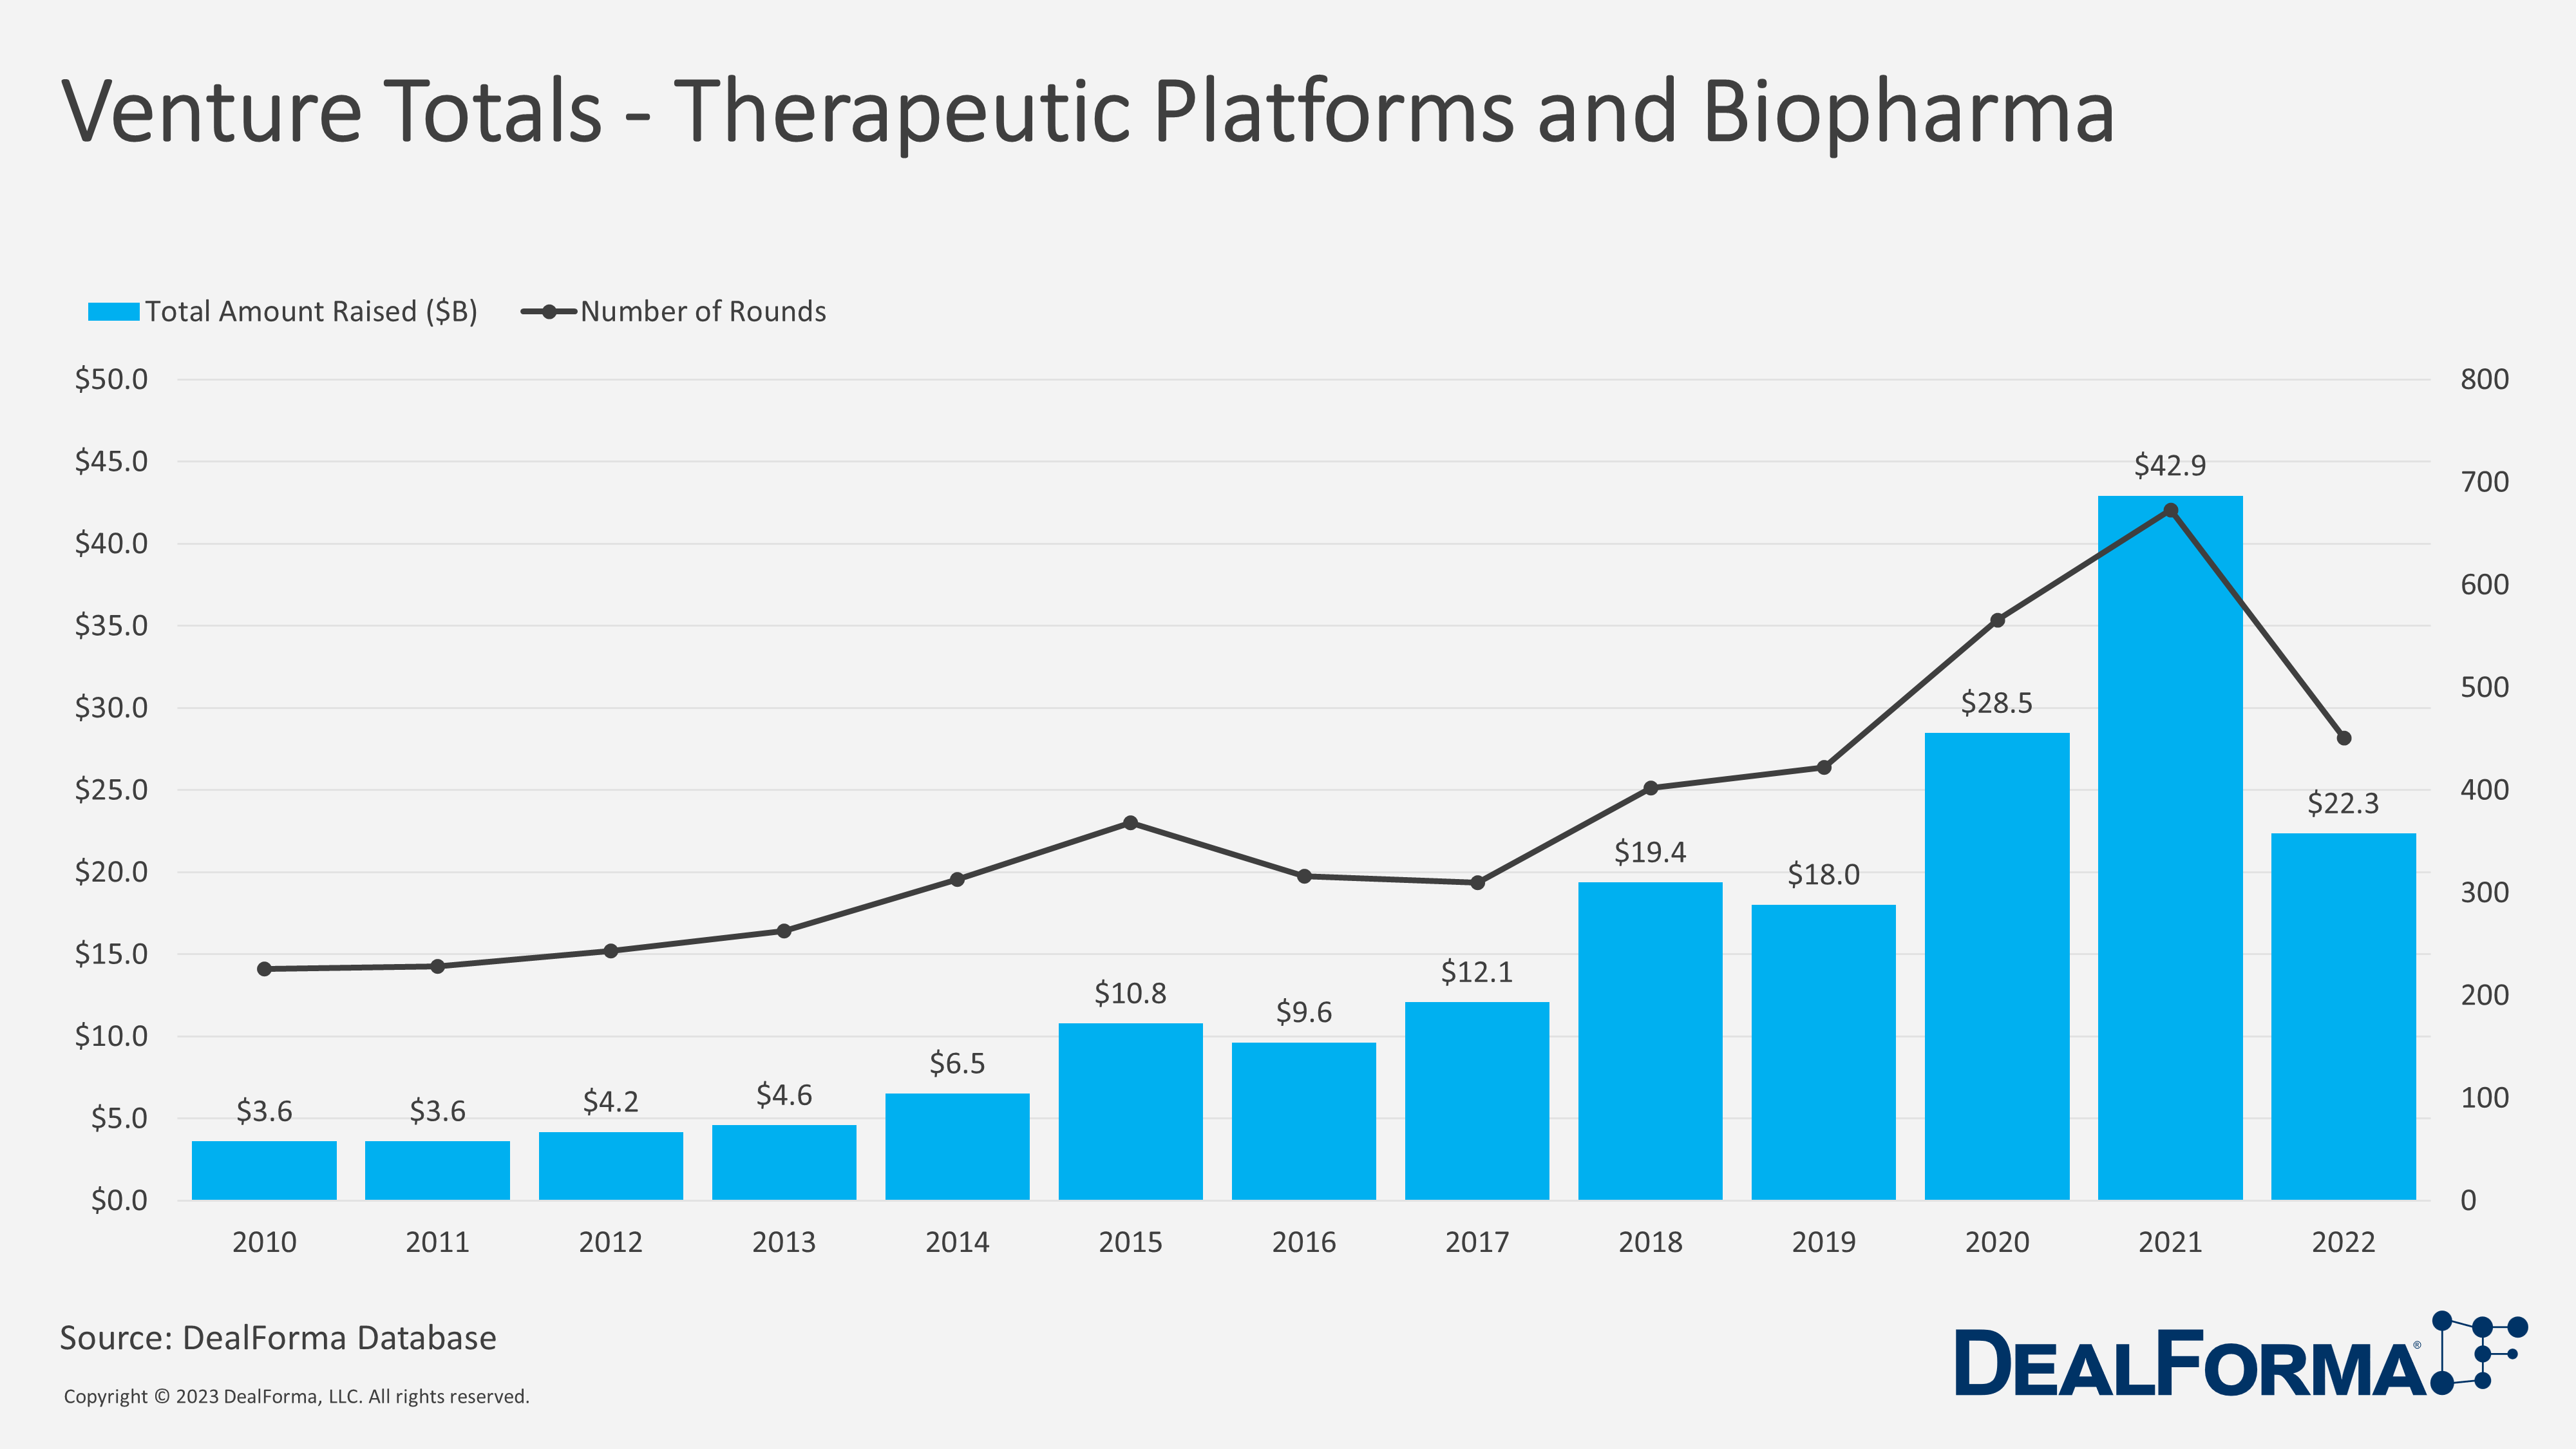 Venture Totals - Therapeutic Platforms and Biopharma